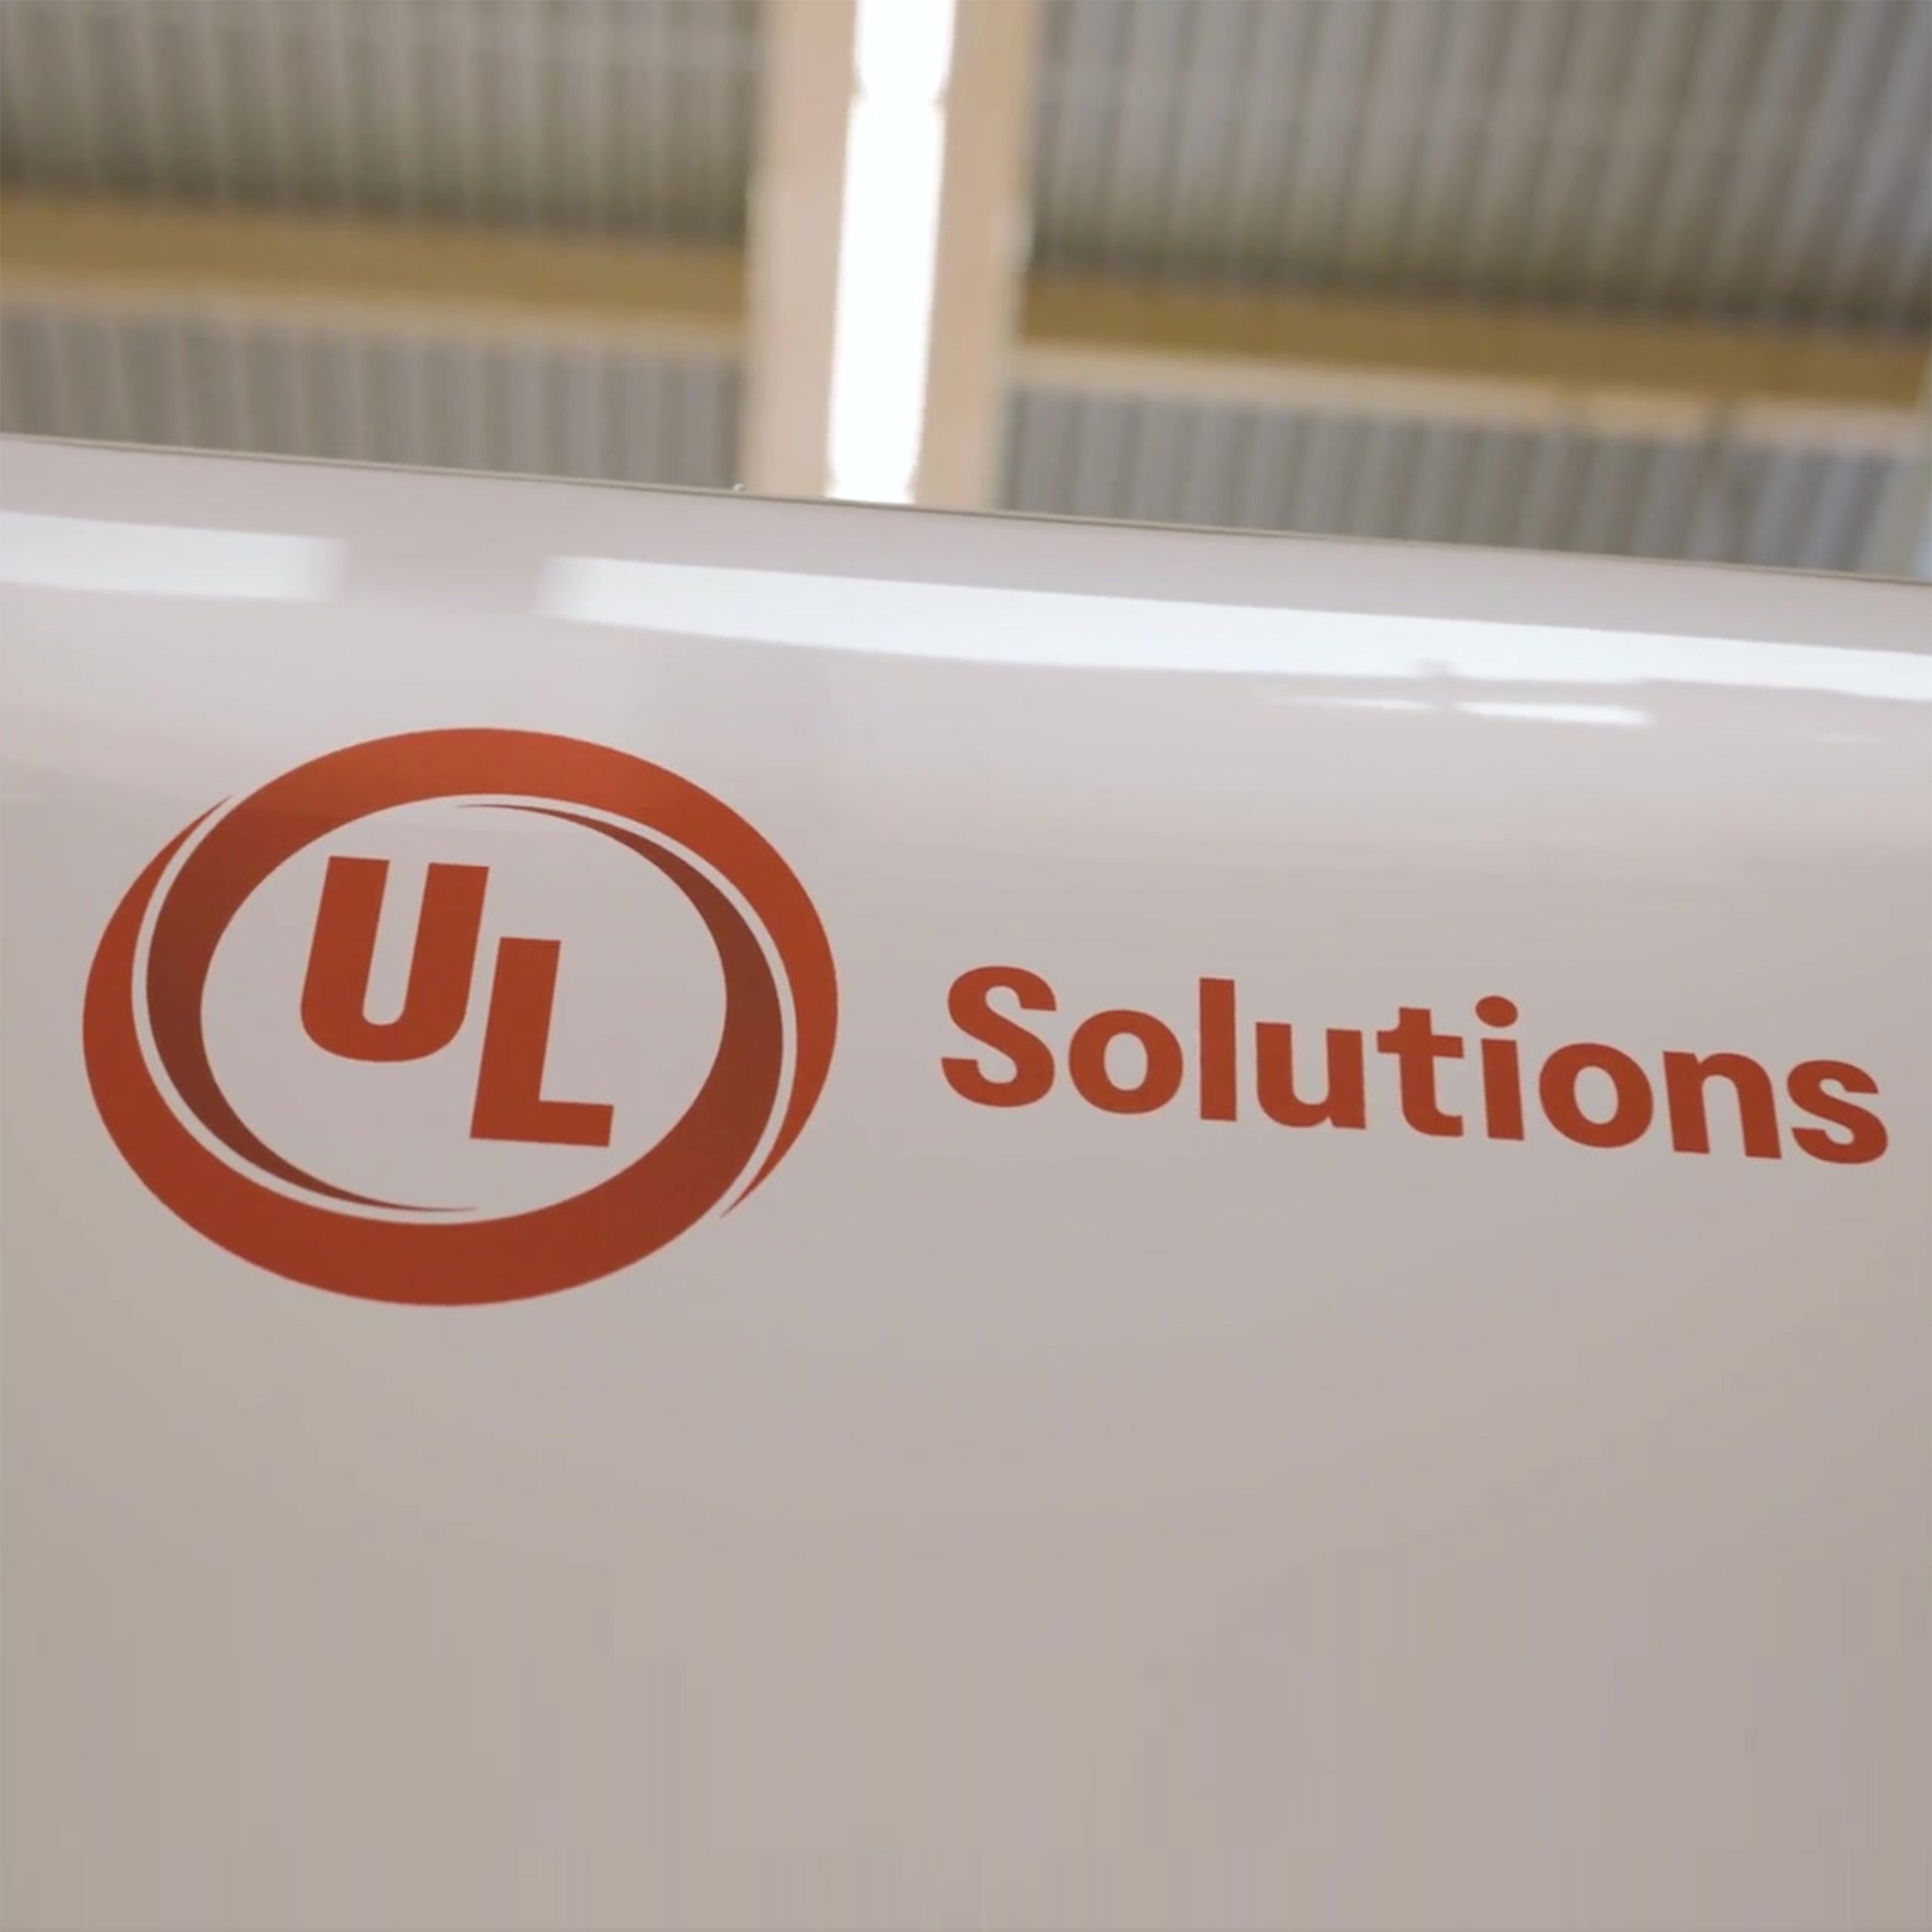 ul_solutions